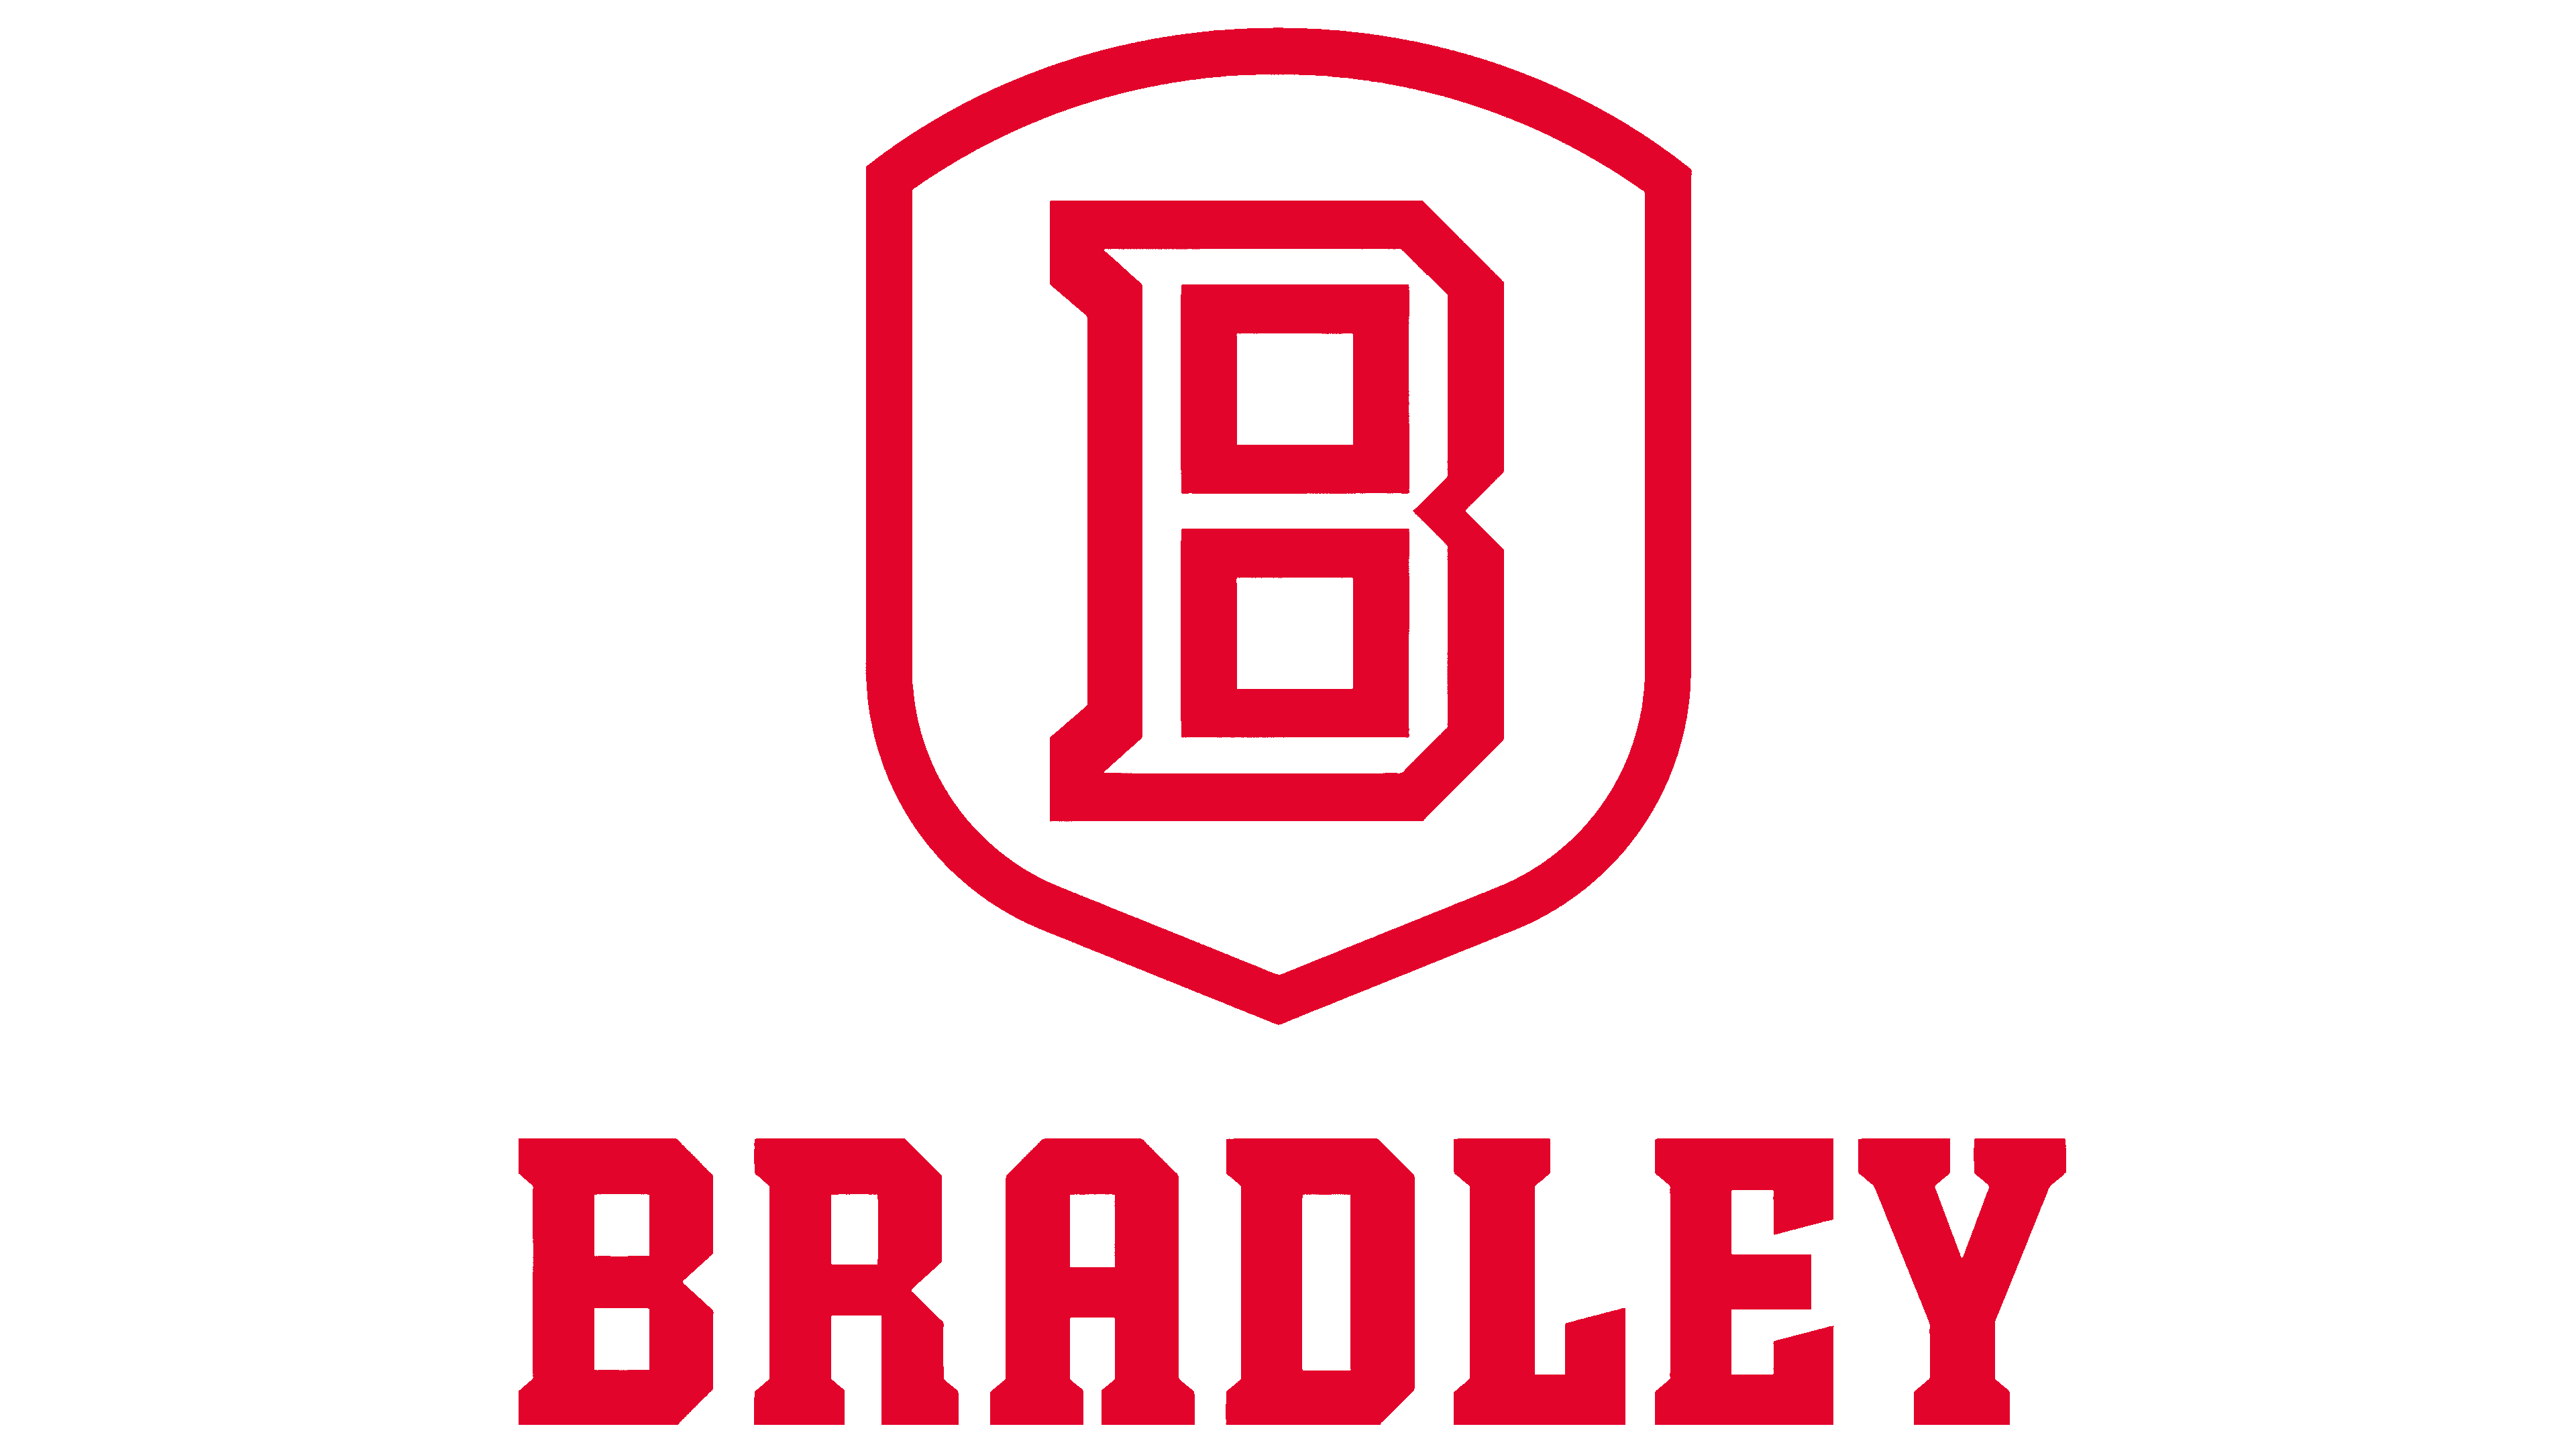 Bradley Braves (@bubraves) / X